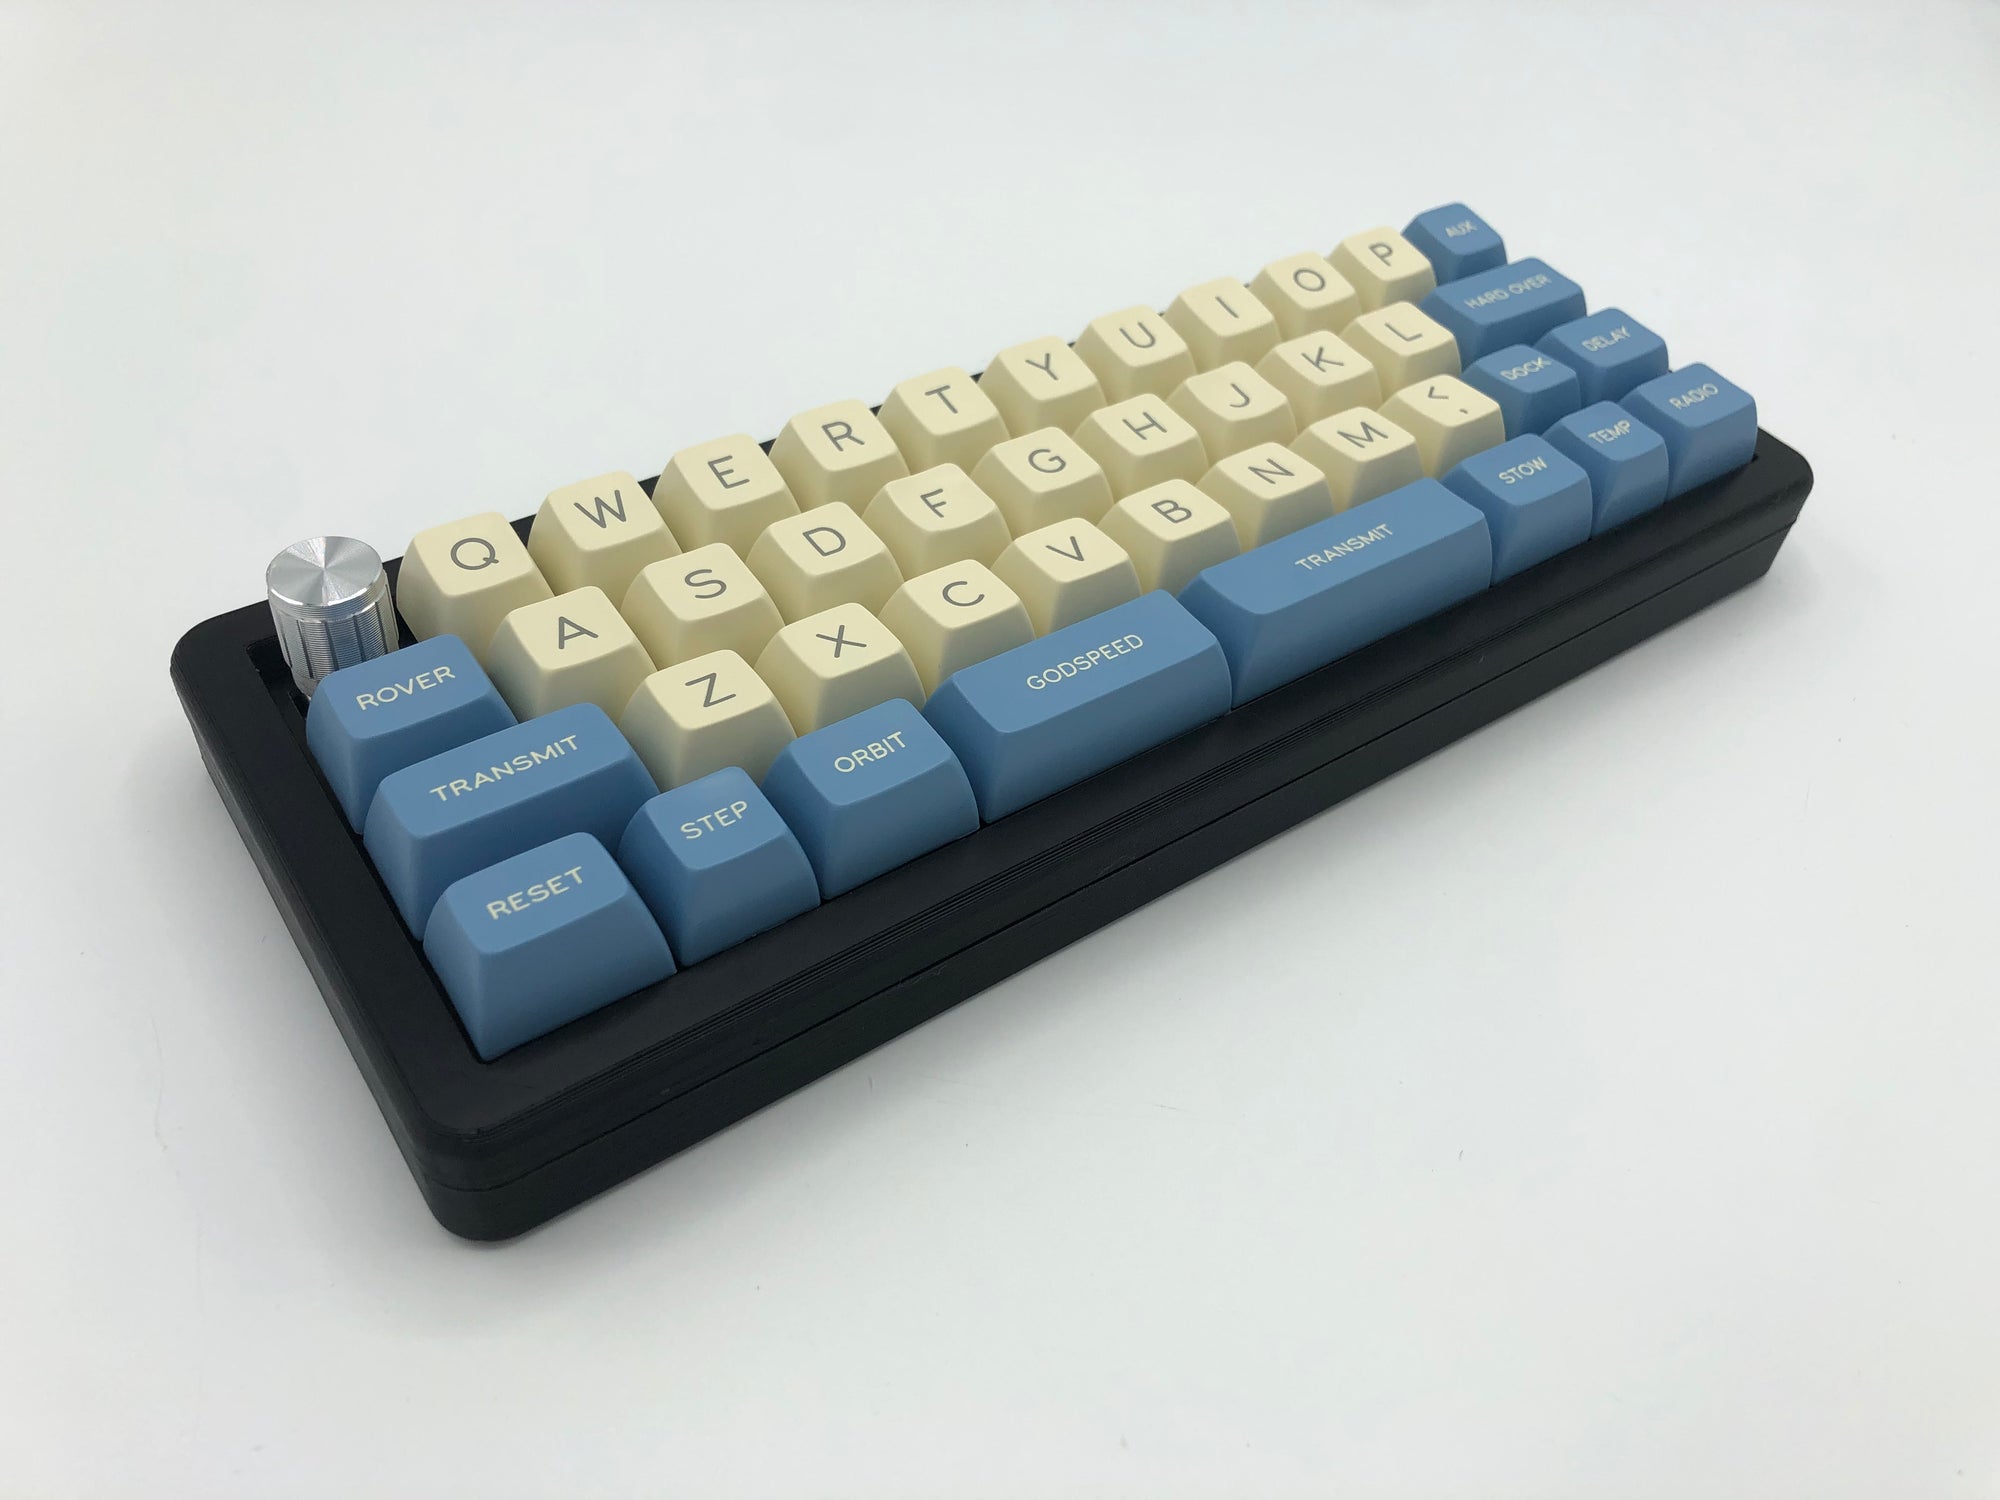 Keyboard PCBs